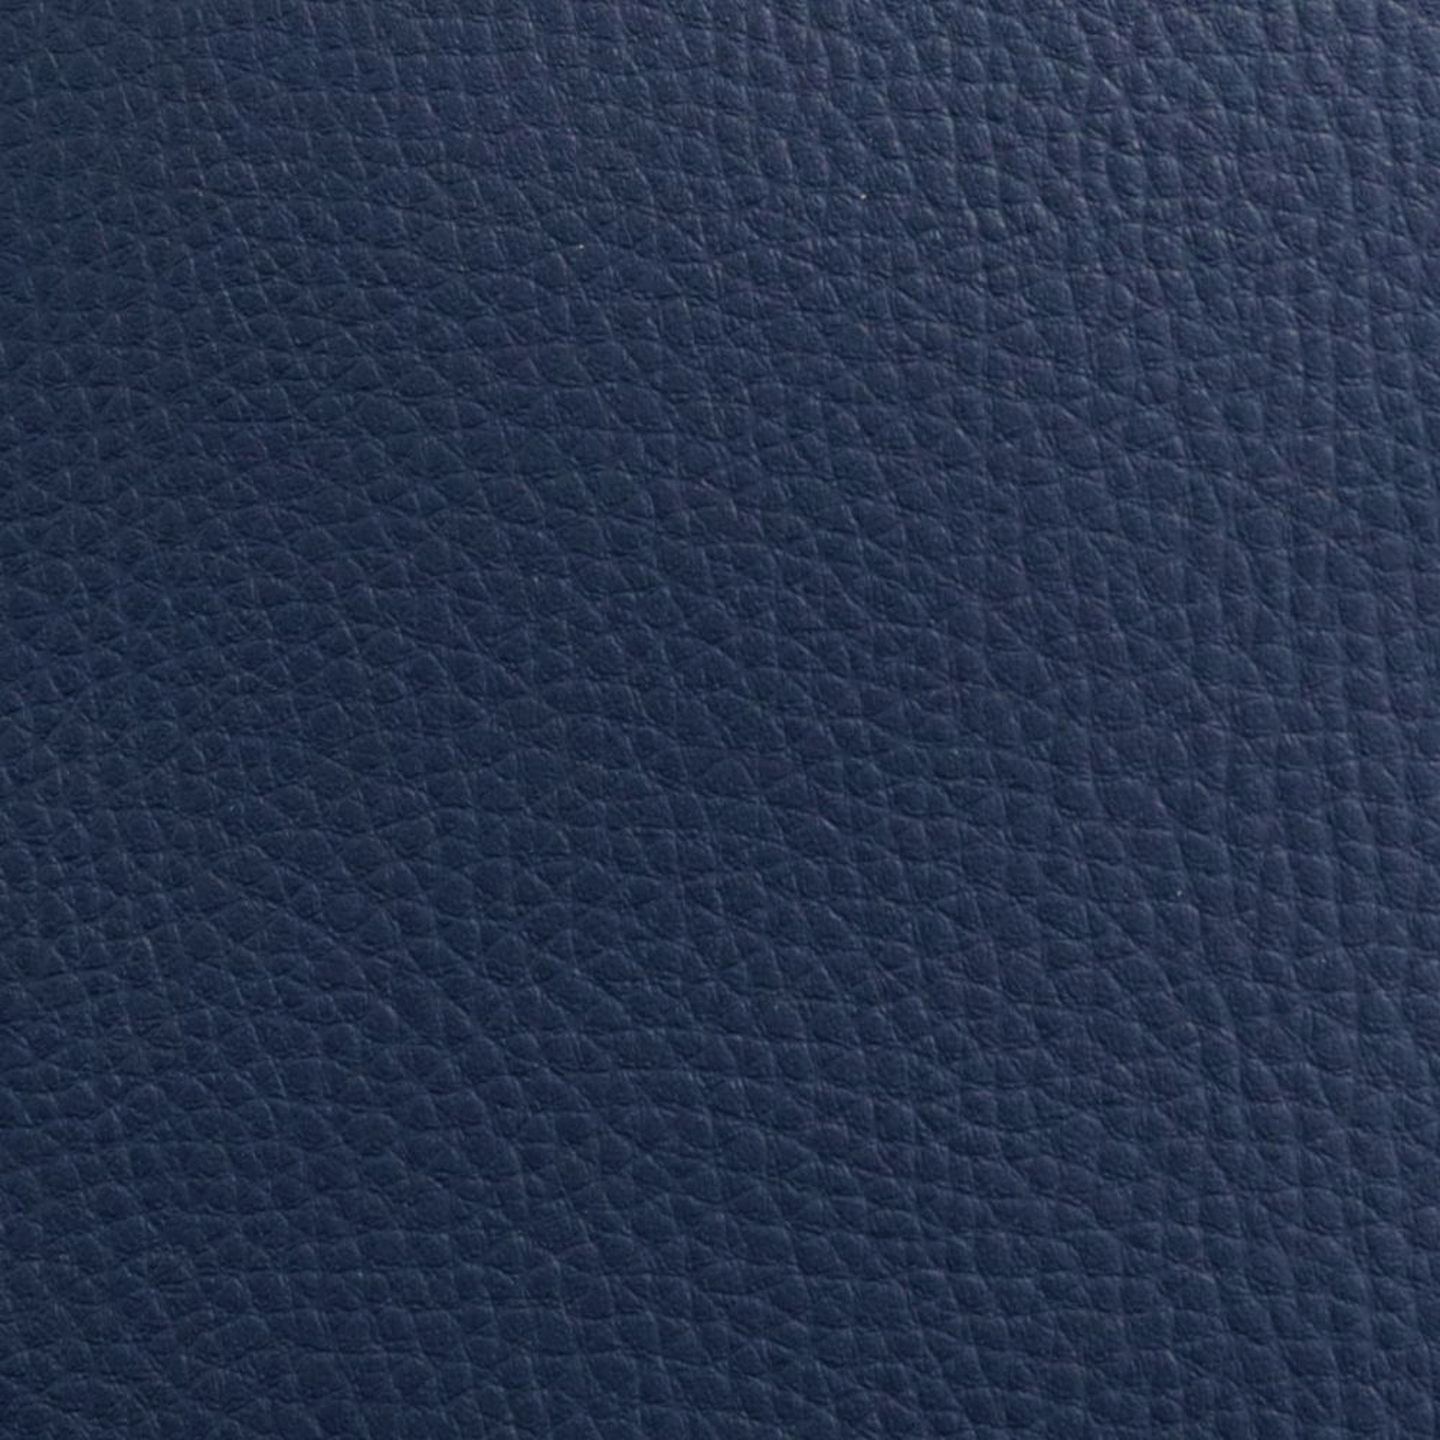 Premium hochwertiges Nappa-Möbel-Kunstleder in dunkel blau